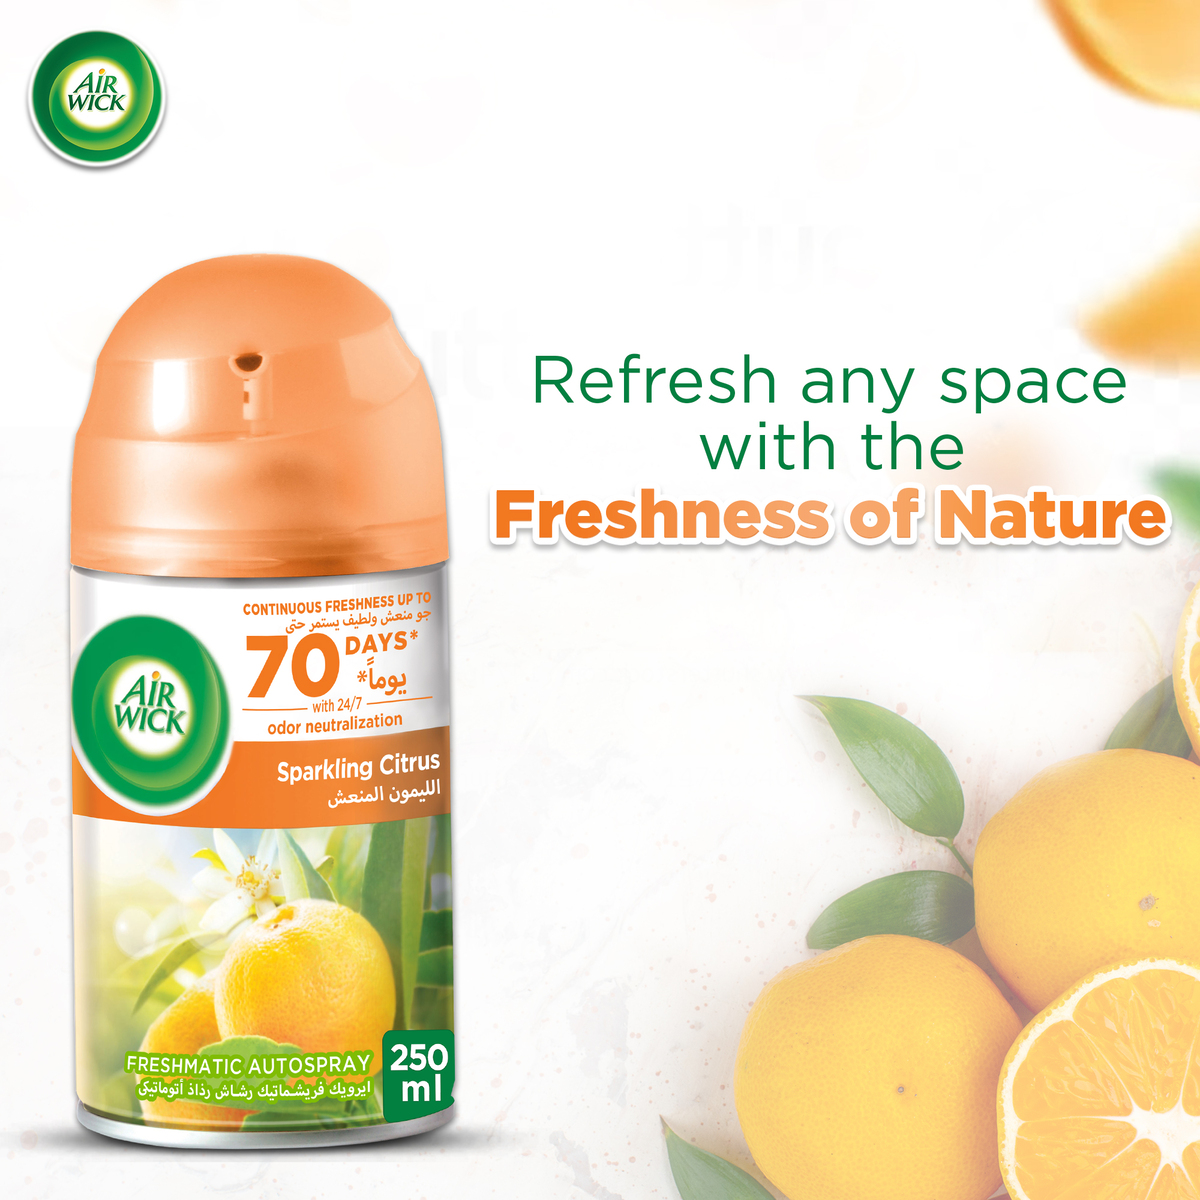 Airwick Air Freshener Freshmatic Refill Sparkling Citrus Value Pack 2 x 250 ml